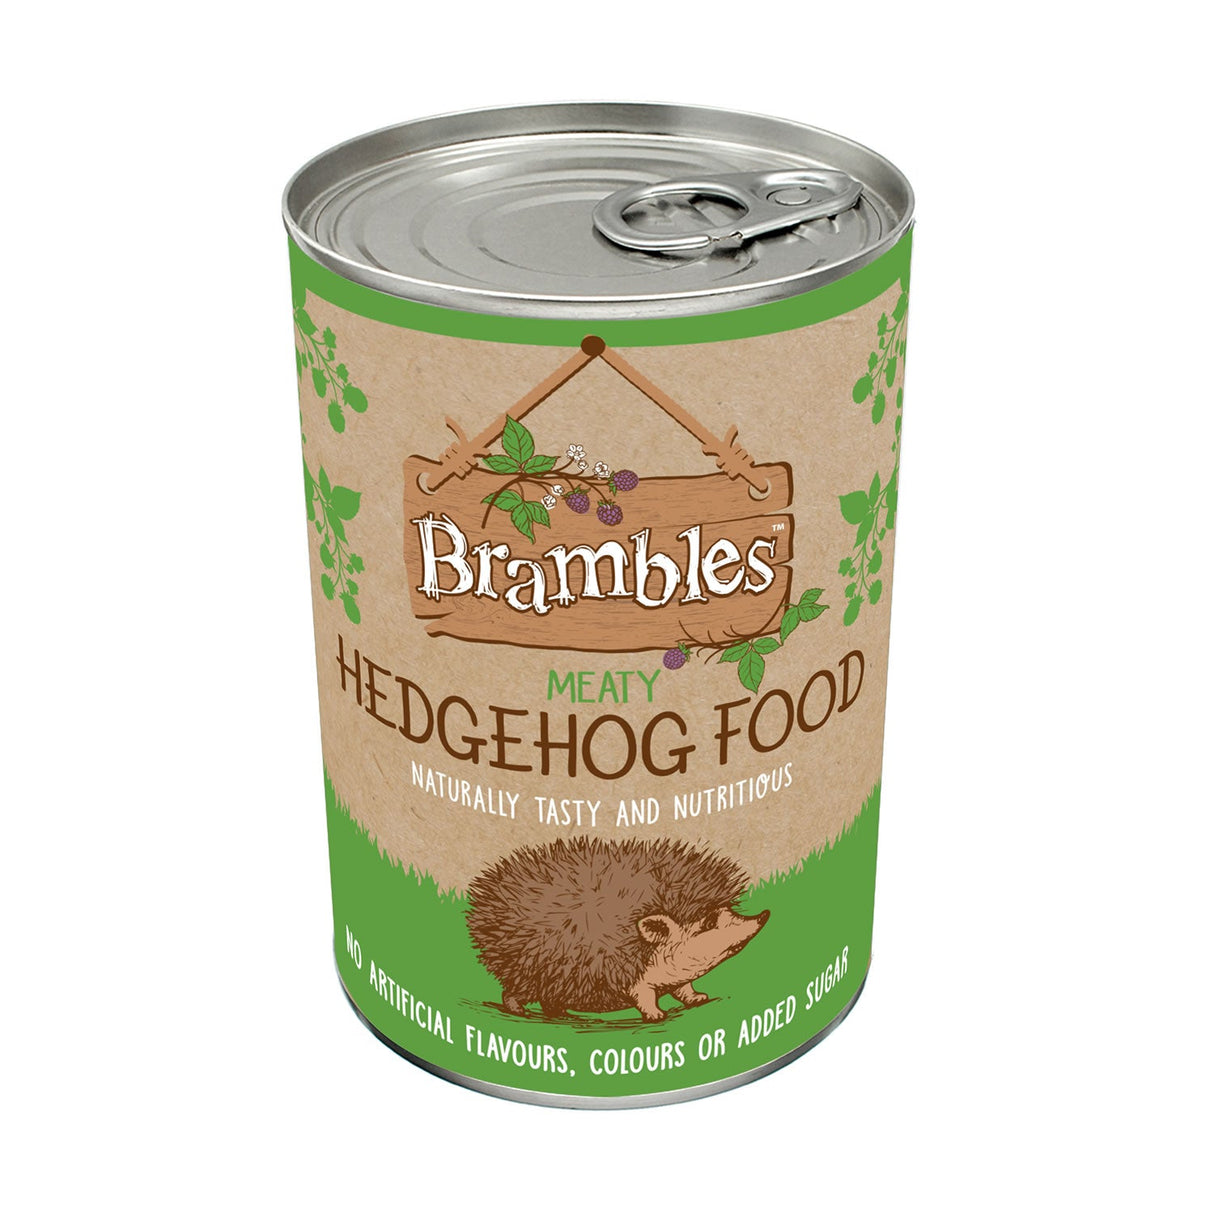 Brambles Meaty Hedgehog Food Hedgehog Food Barnstaple Equestrian Supplies